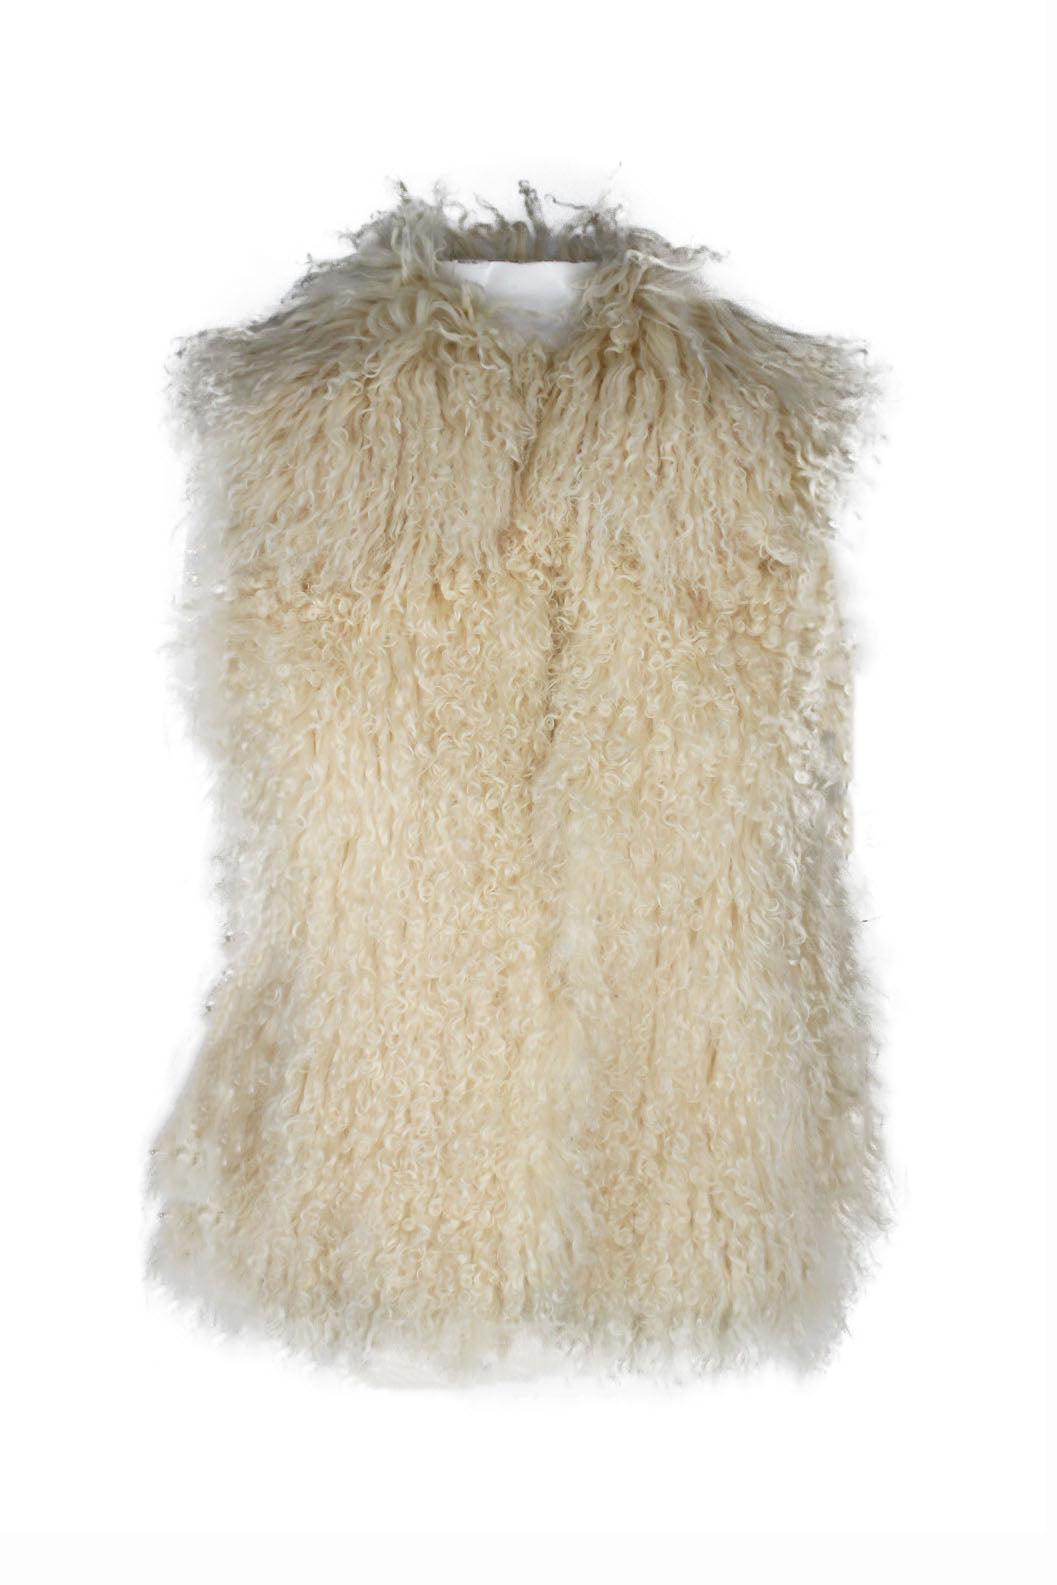 description: avanti beige mongolian fur vest. features single hook closure at center front, longer fur at collar, and two slit pockets at sides. 